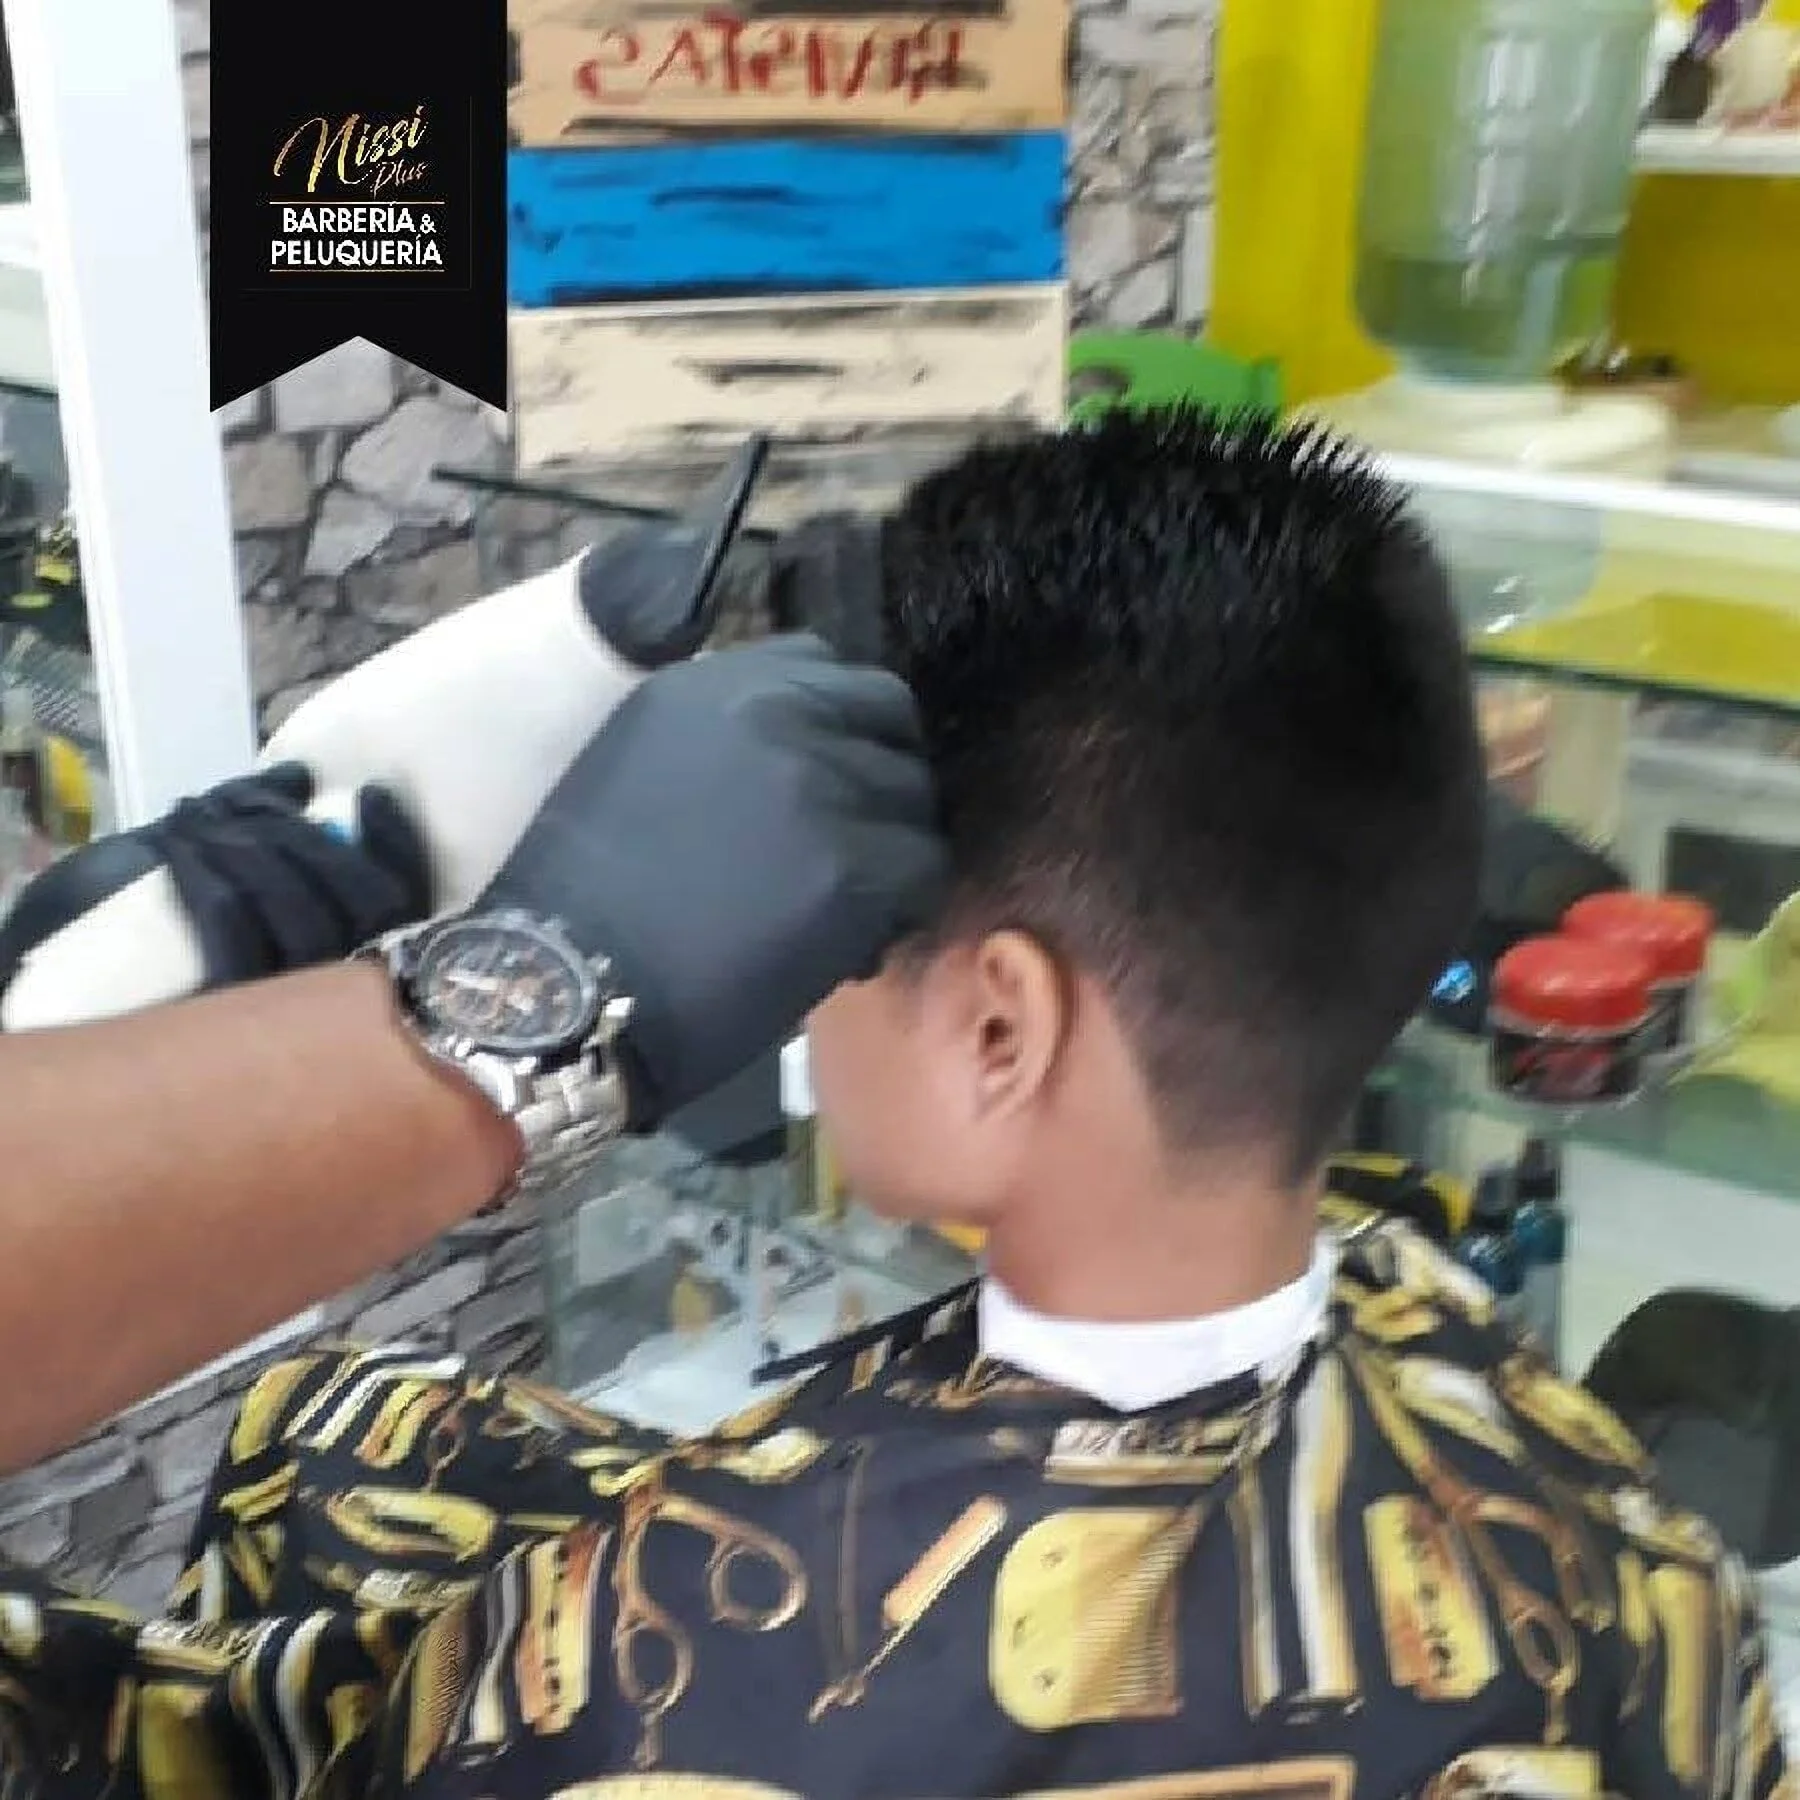 Barbería-nissi-plus-barberia-y-peluqueria-7404